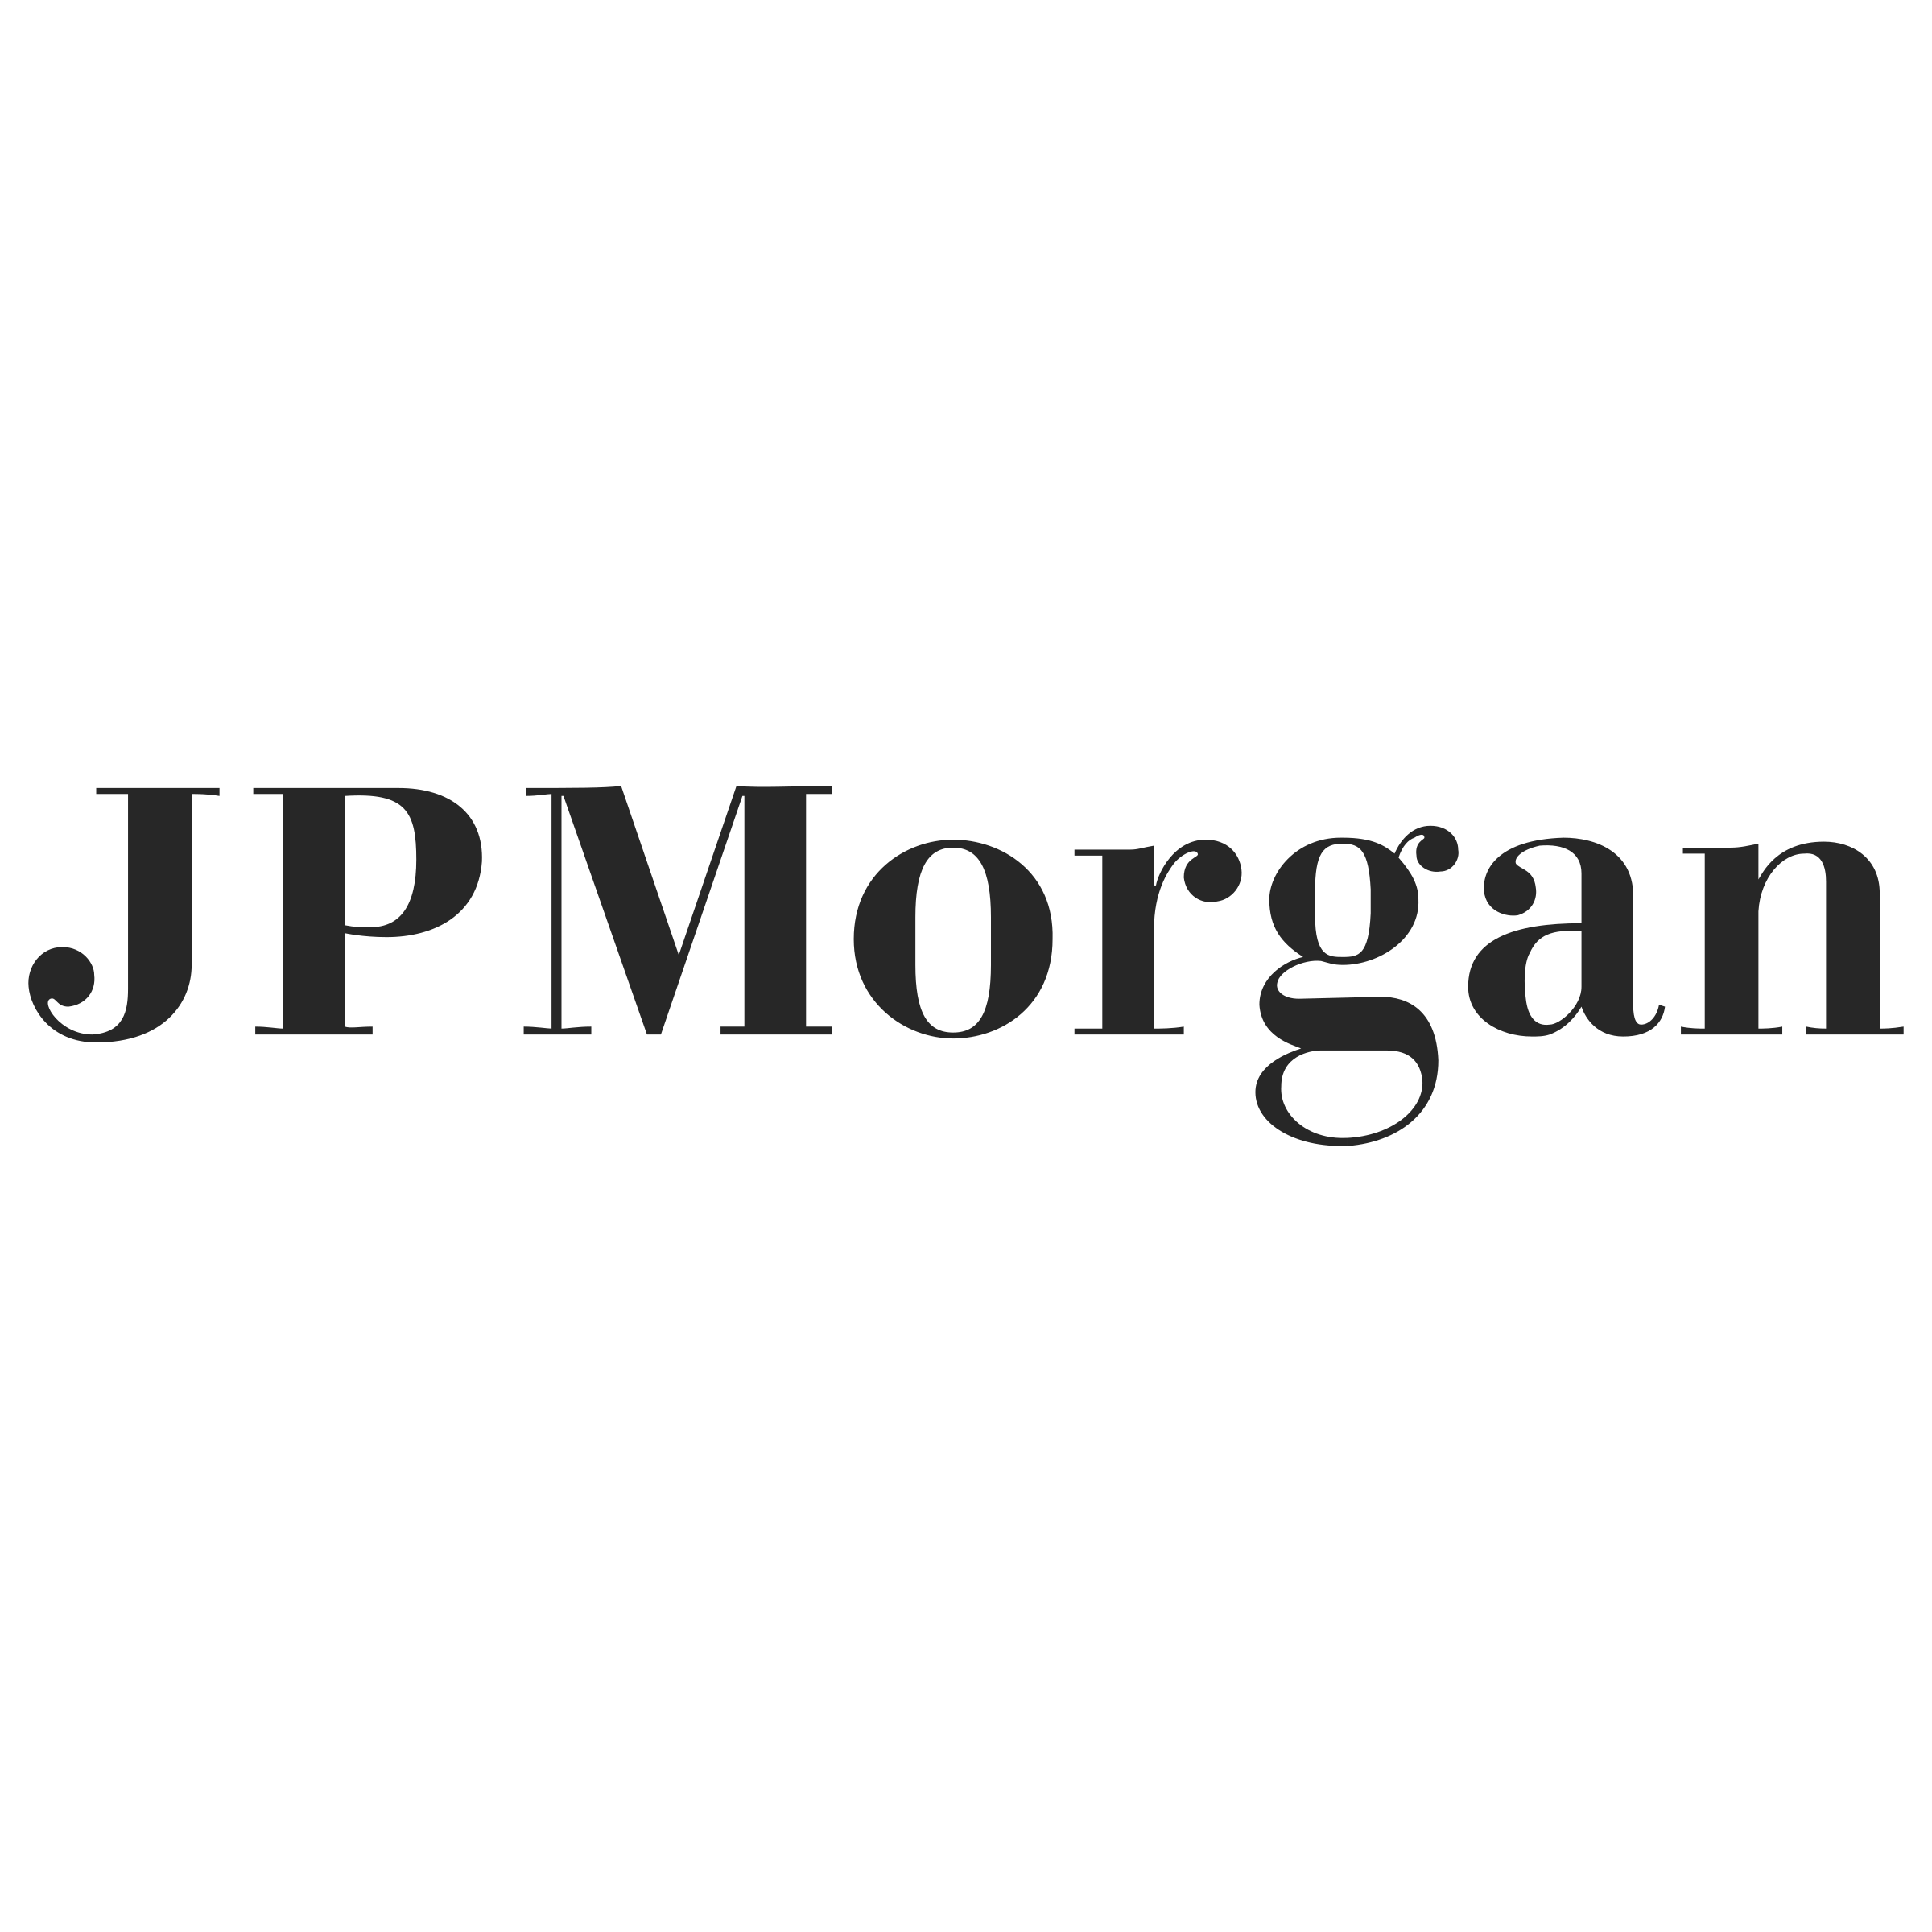 JPMorgan Logo - JPMorgan Logo PNG Transparent & SVG Vector